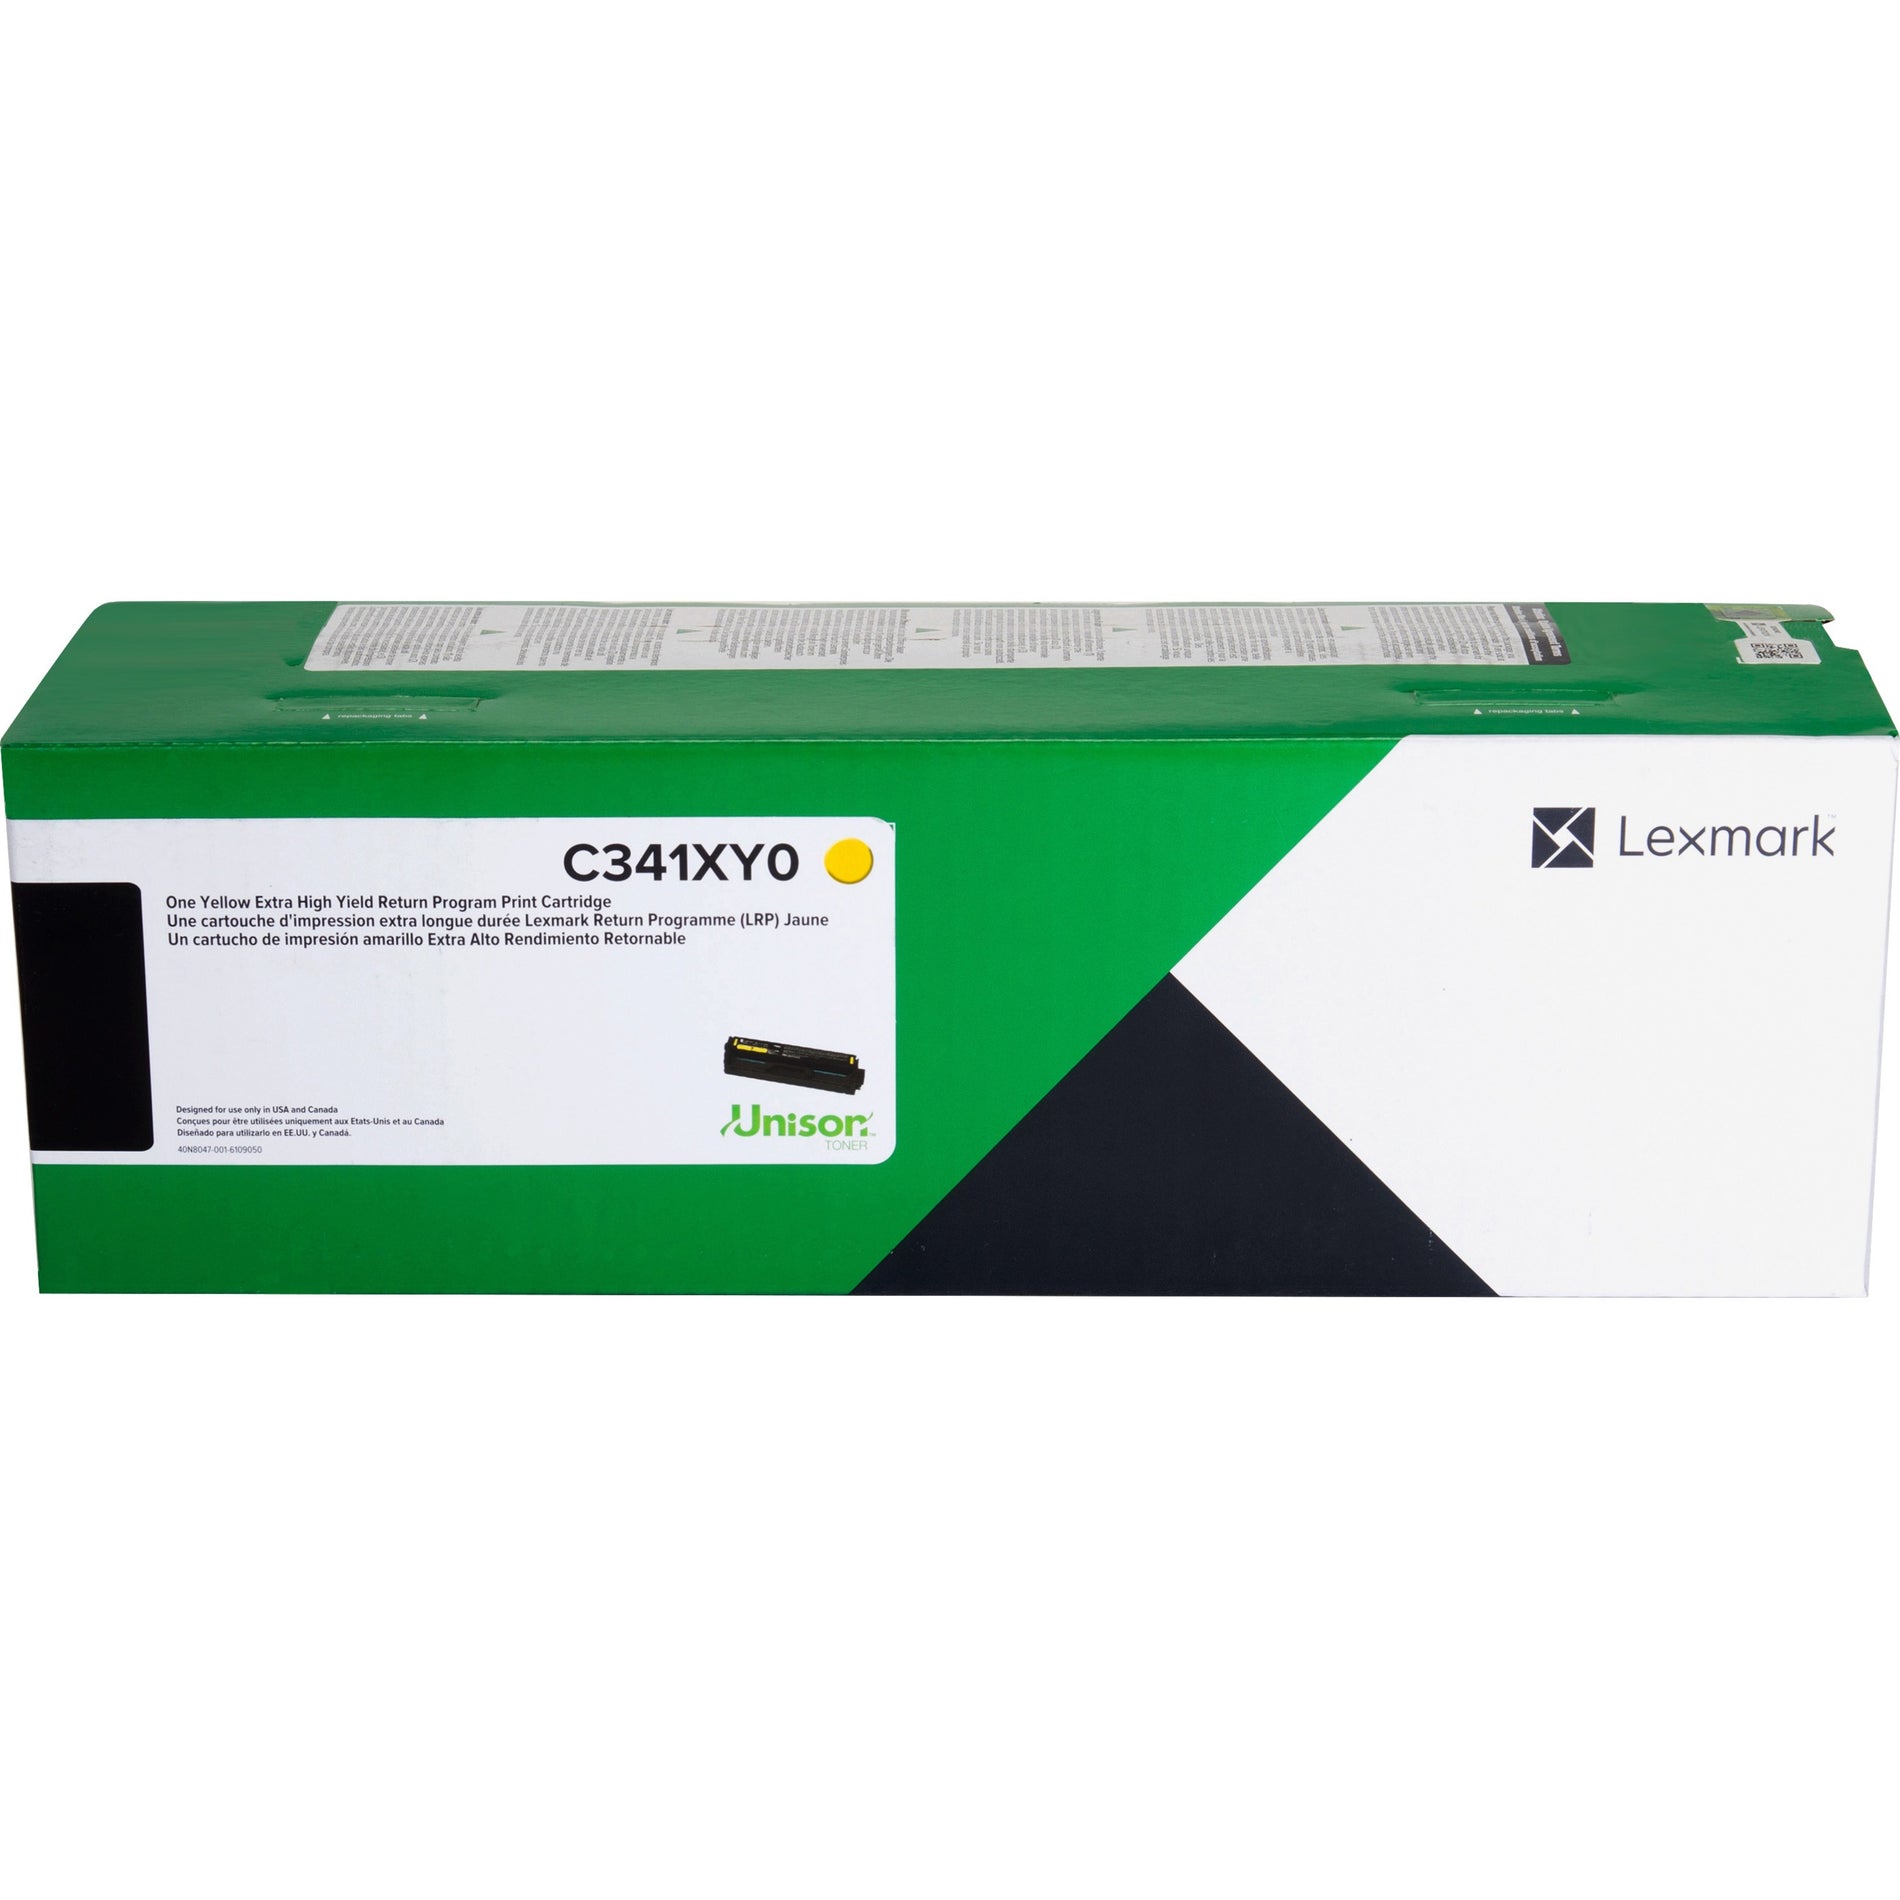 Lexmark C341XY0 Yellow Extra High Yield Return Program Print Cartridge, Toner Cartridge - 4500 Pages